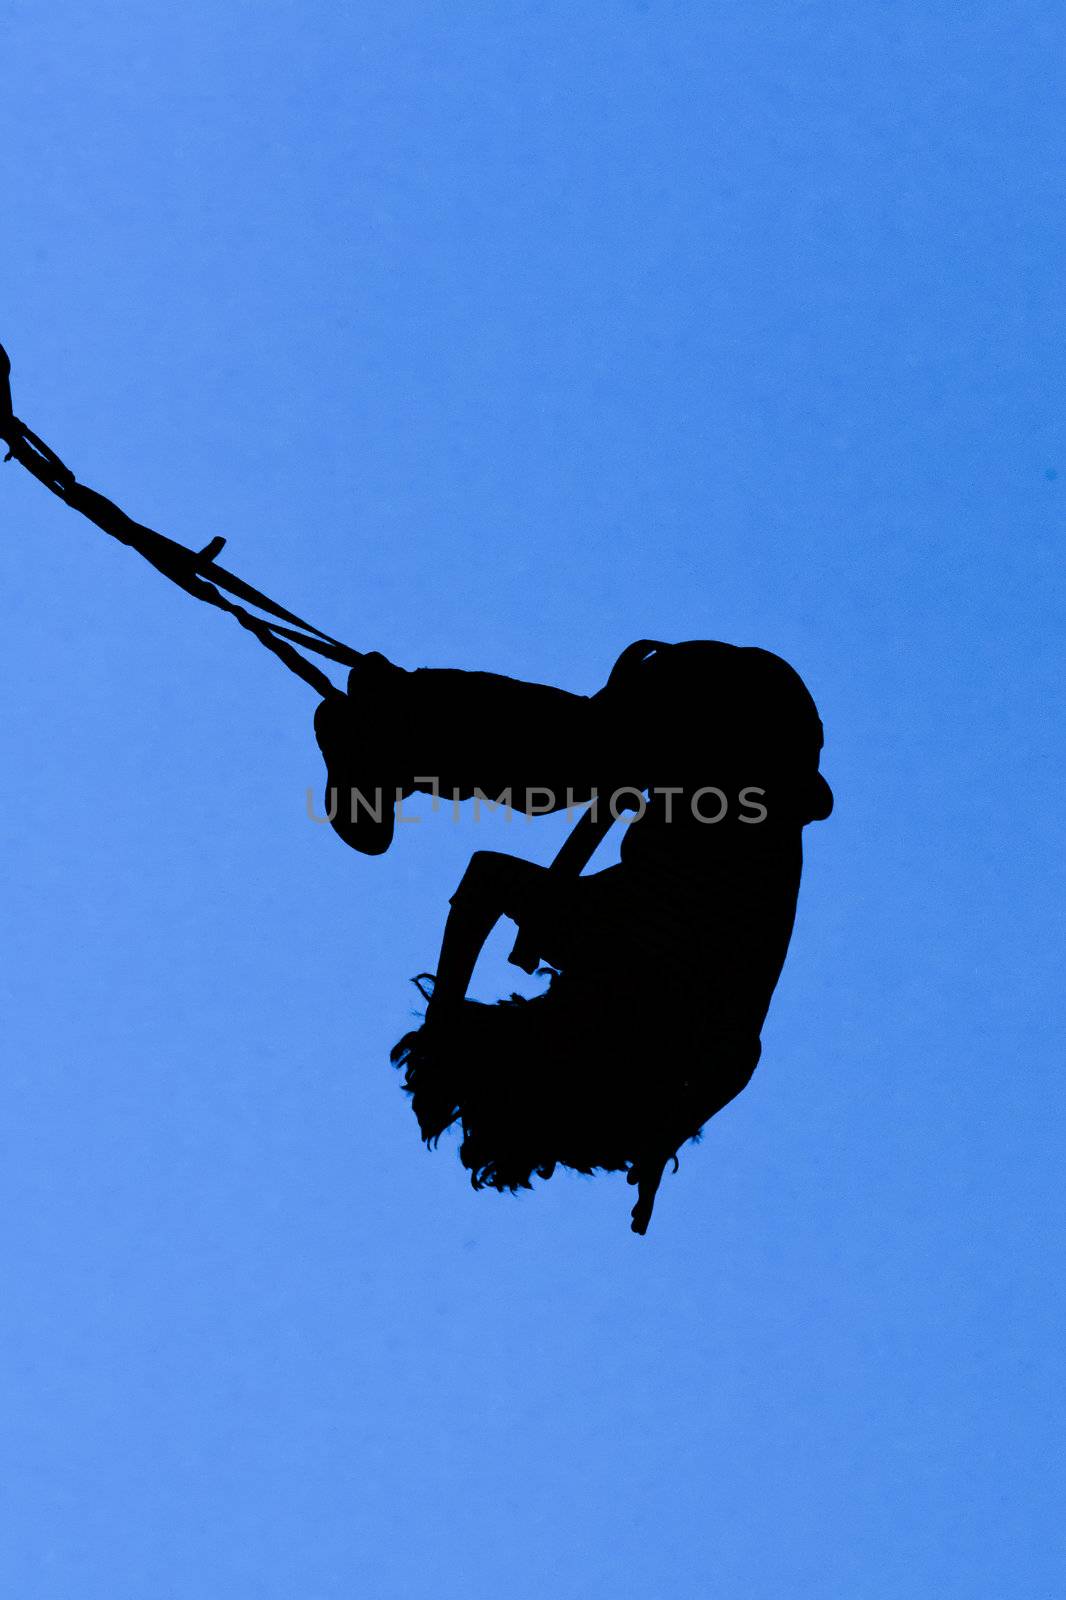 Bungee jumper against blue sky by PiLens